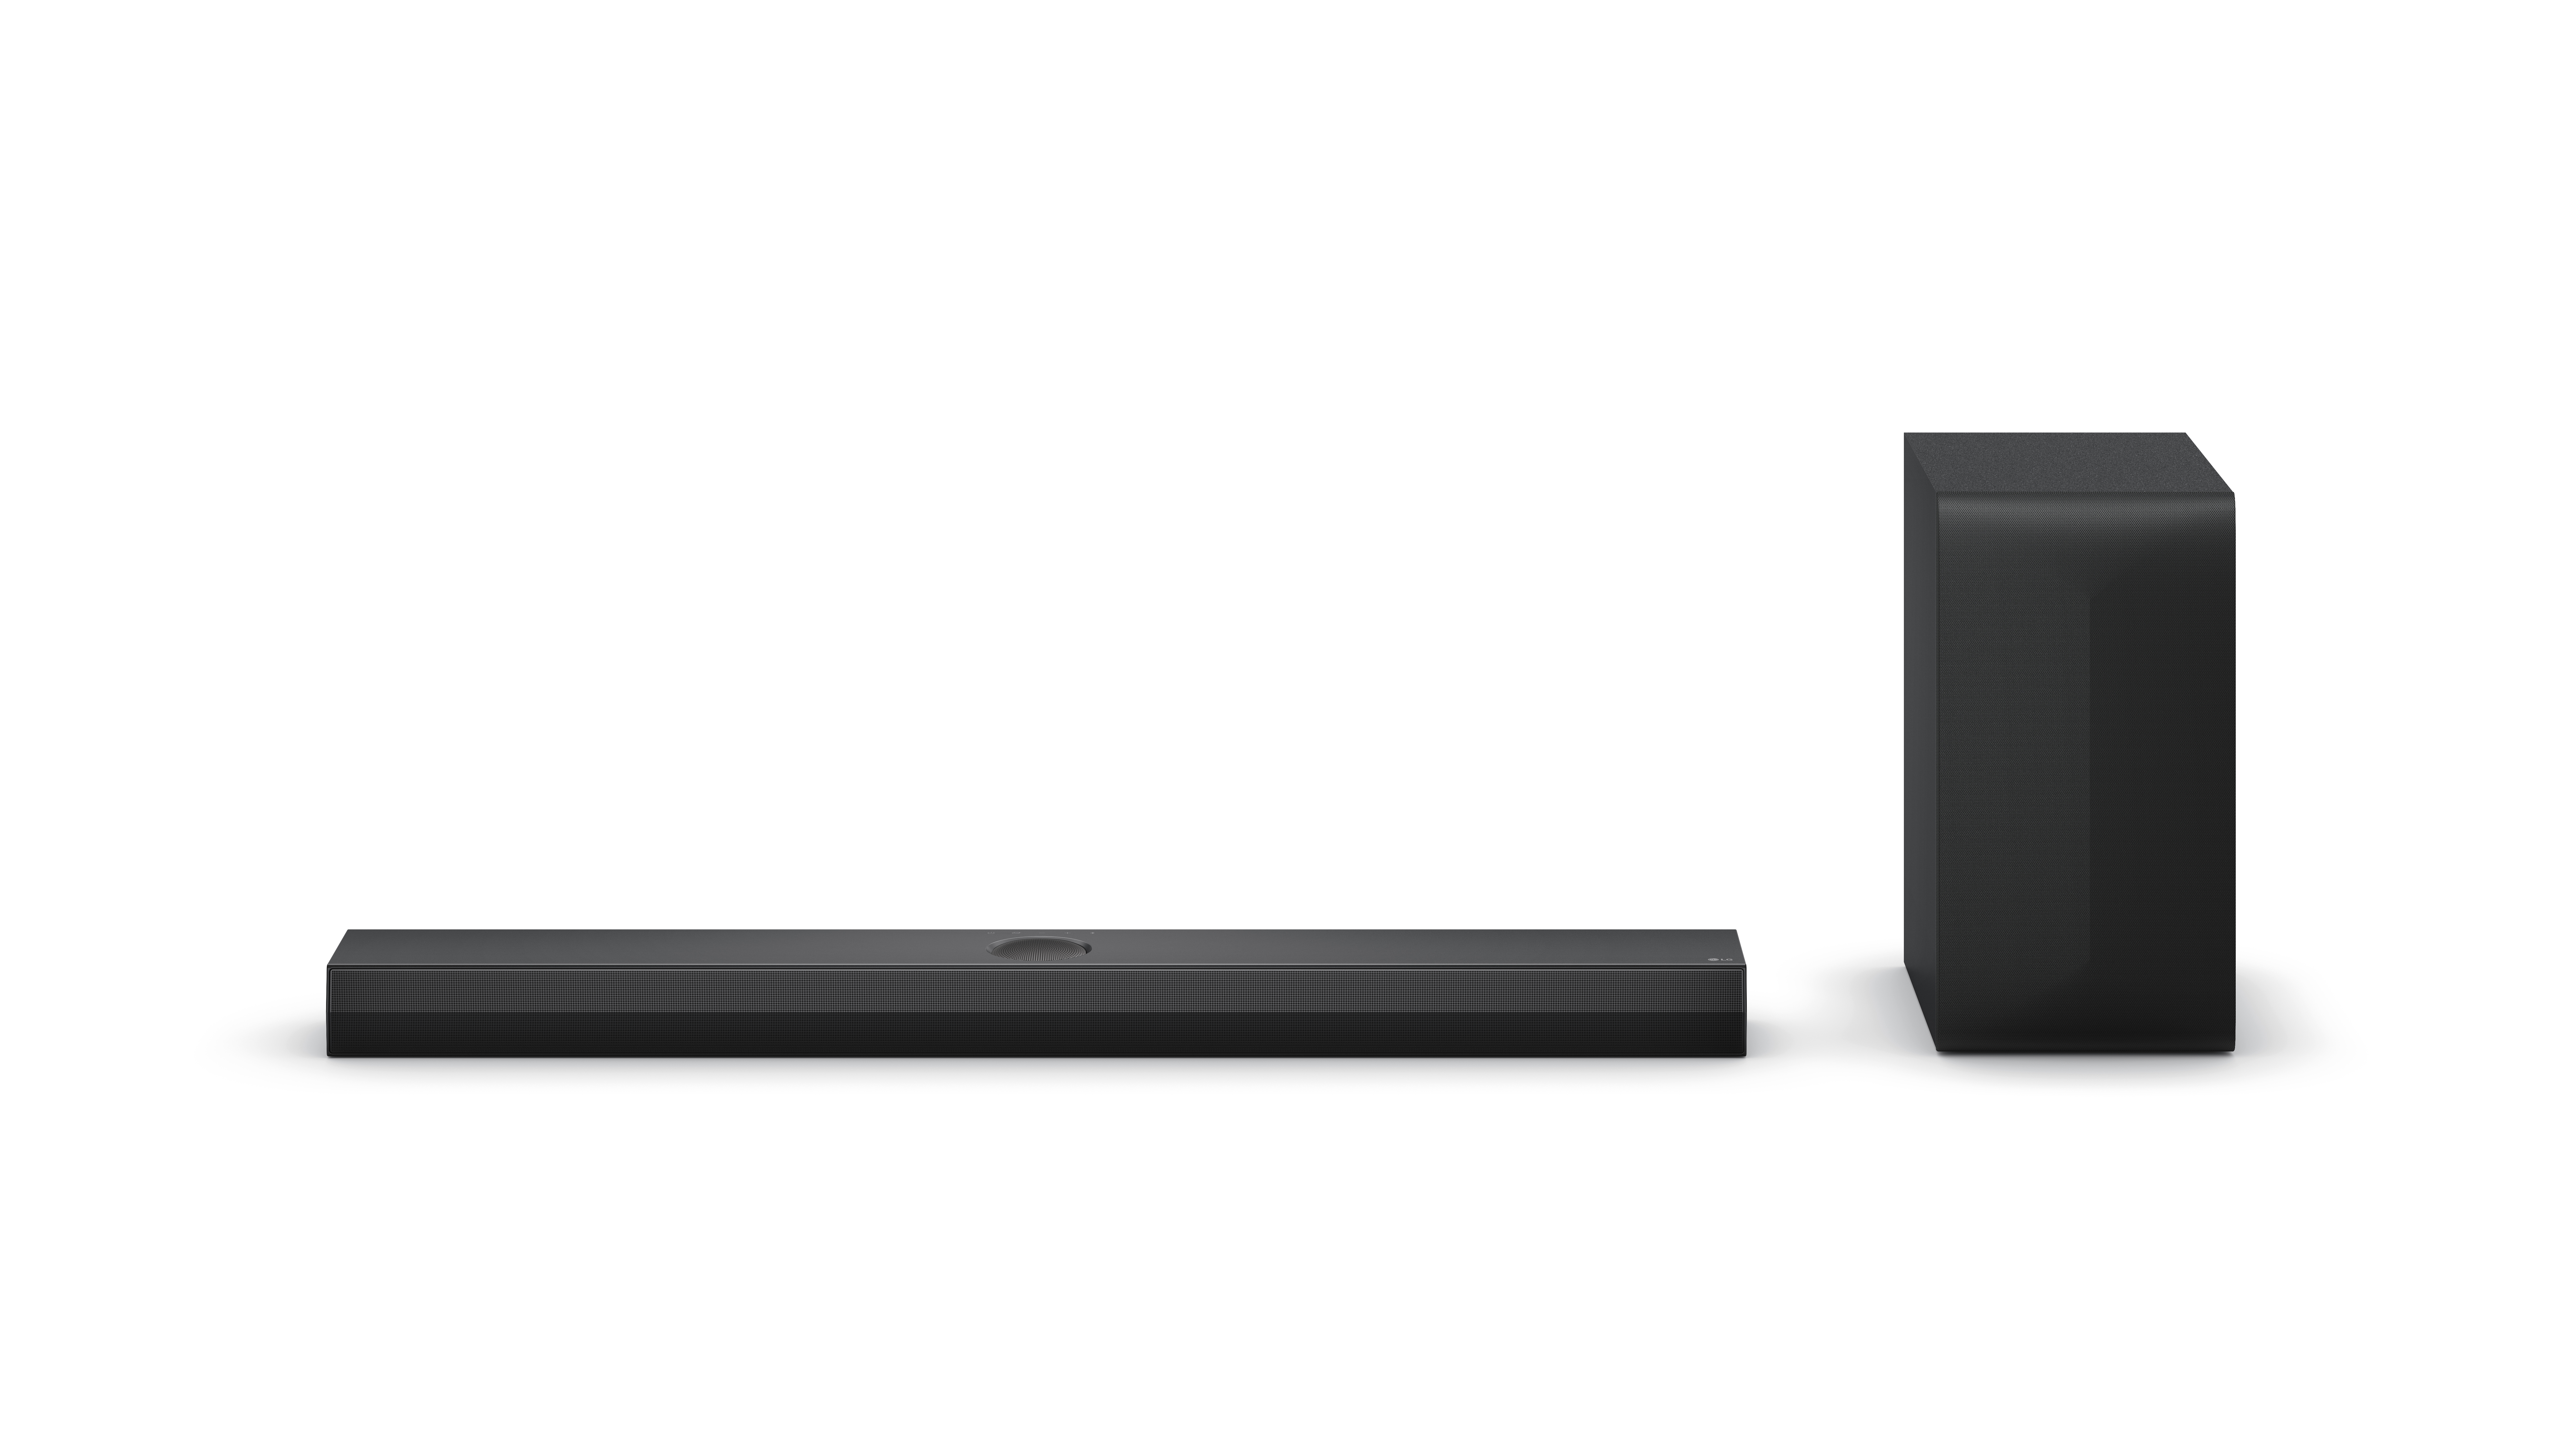 Soundbar mit günstig Kaufen-LG DS70TY 3.1.1 Dolby Atmos Soundbar, 400 Watt Subwoofer schwarz. LG DS70TY 3.1.1 Dolby Atmos Soundbar, 400 Watt Subwoofer schwarz <![CDATA[• 3.1.1 Dolby Atmos Soundbar mit 400 Watt • Center Upfiring Speaker in Soundbar • Dolby Atmos Music • Empfo